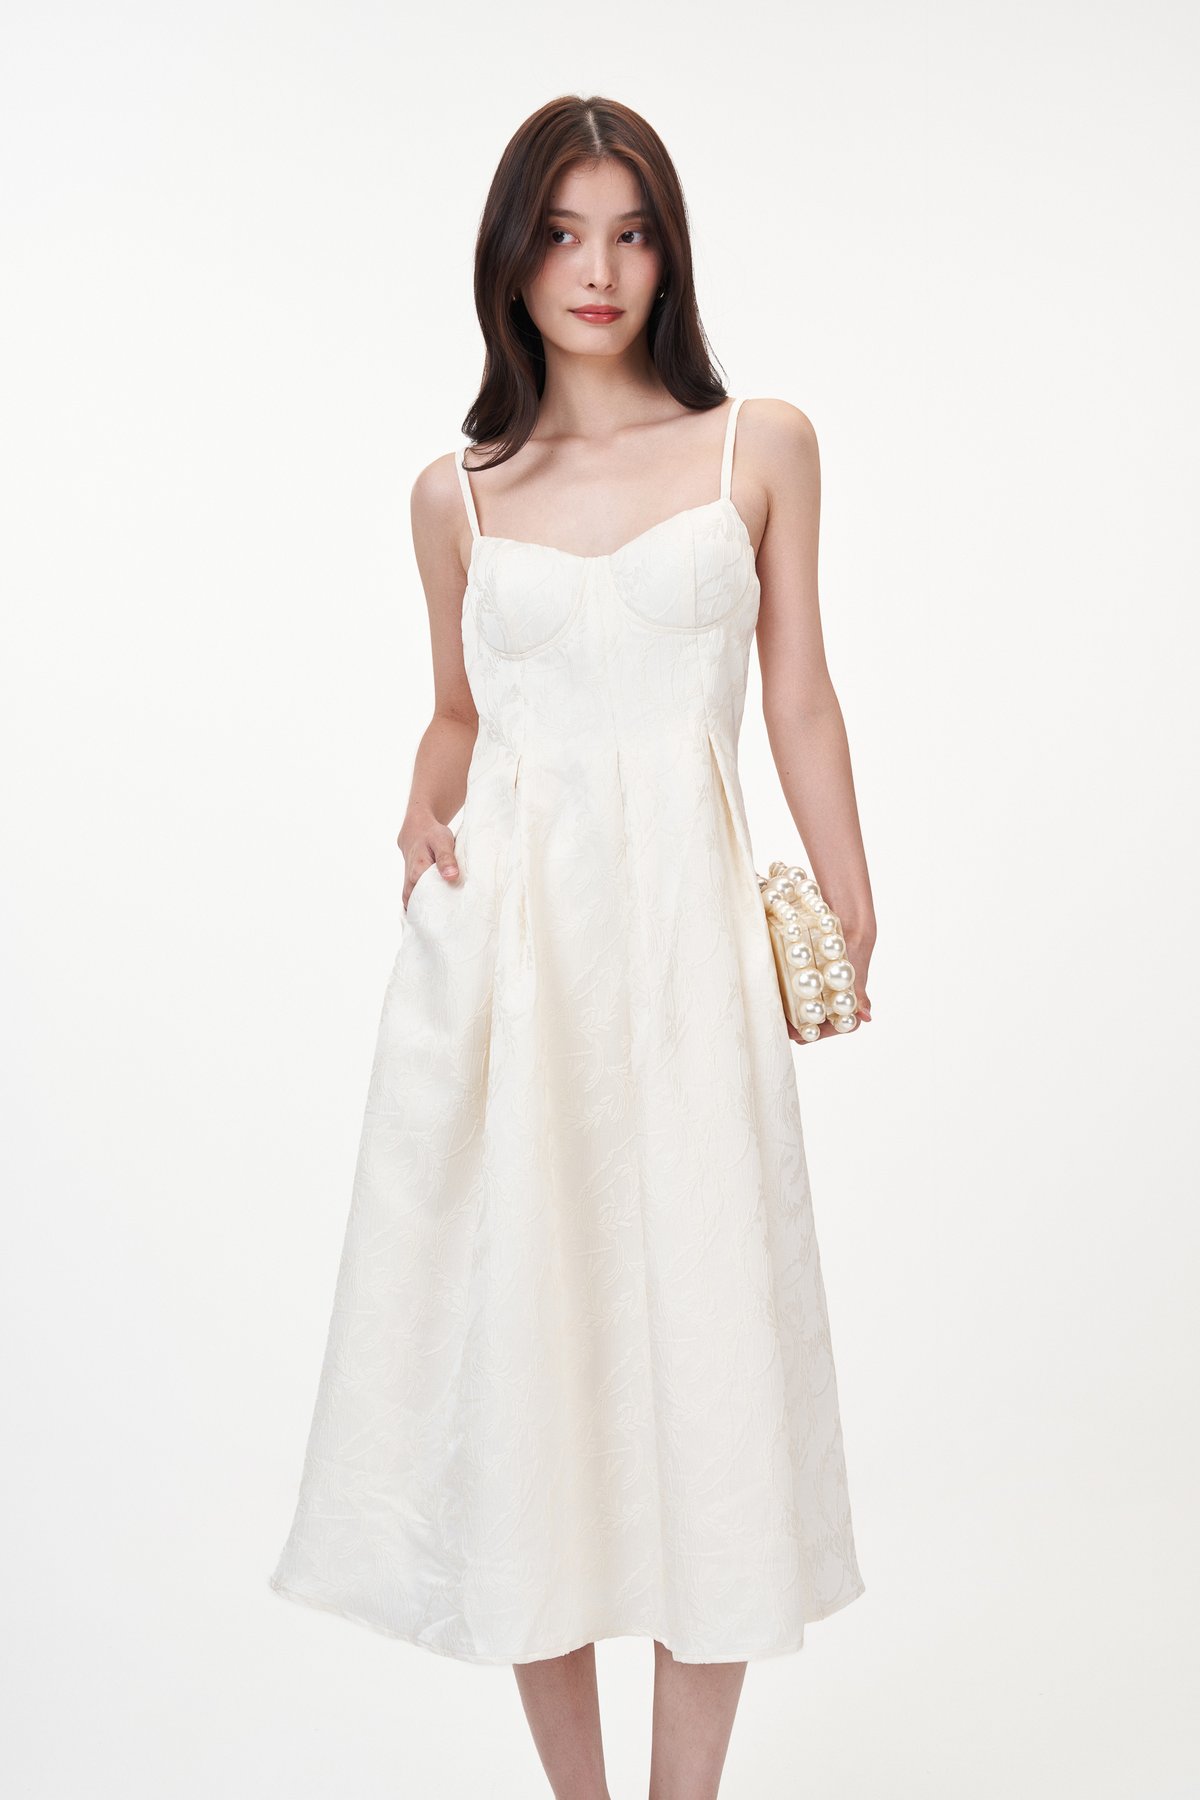 Elise Padded Bustier Dress in Cream